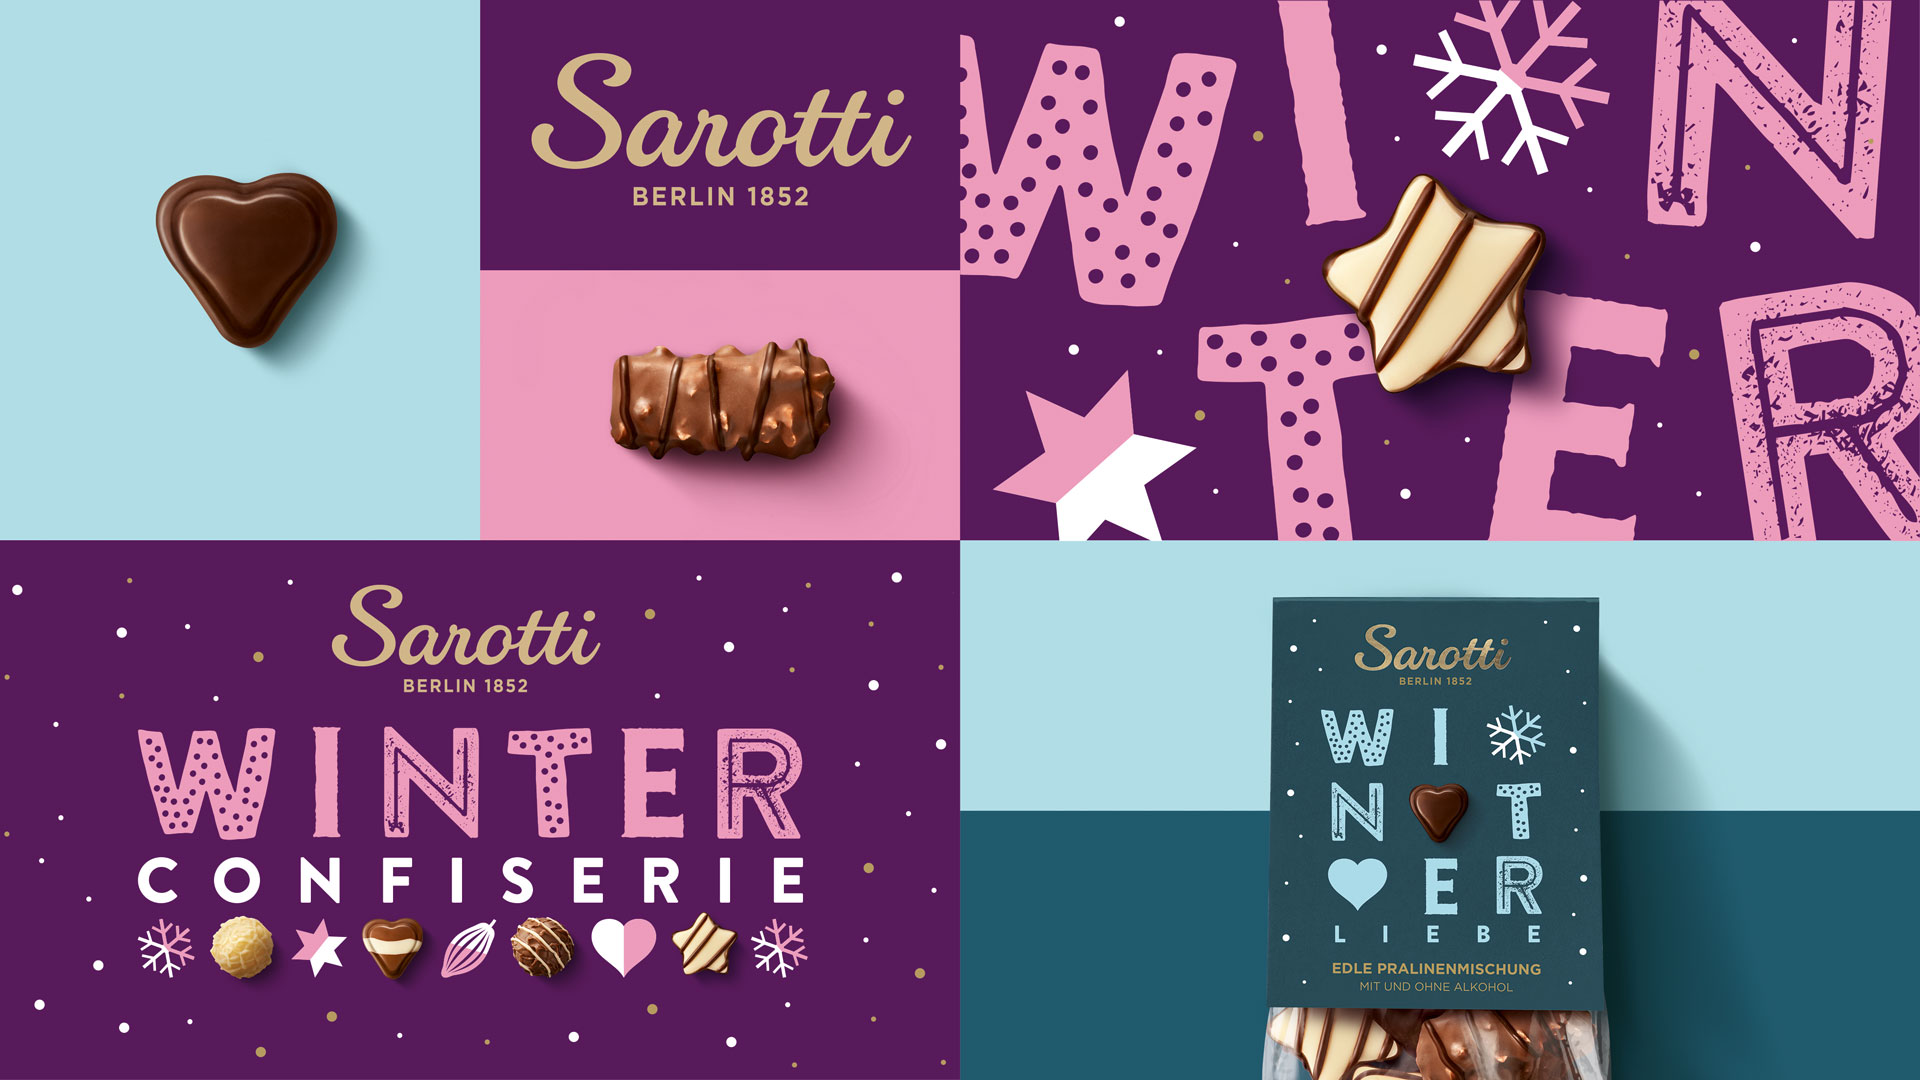 Sarotti’s Winter Confiserie Packaging Design by Hajok Design